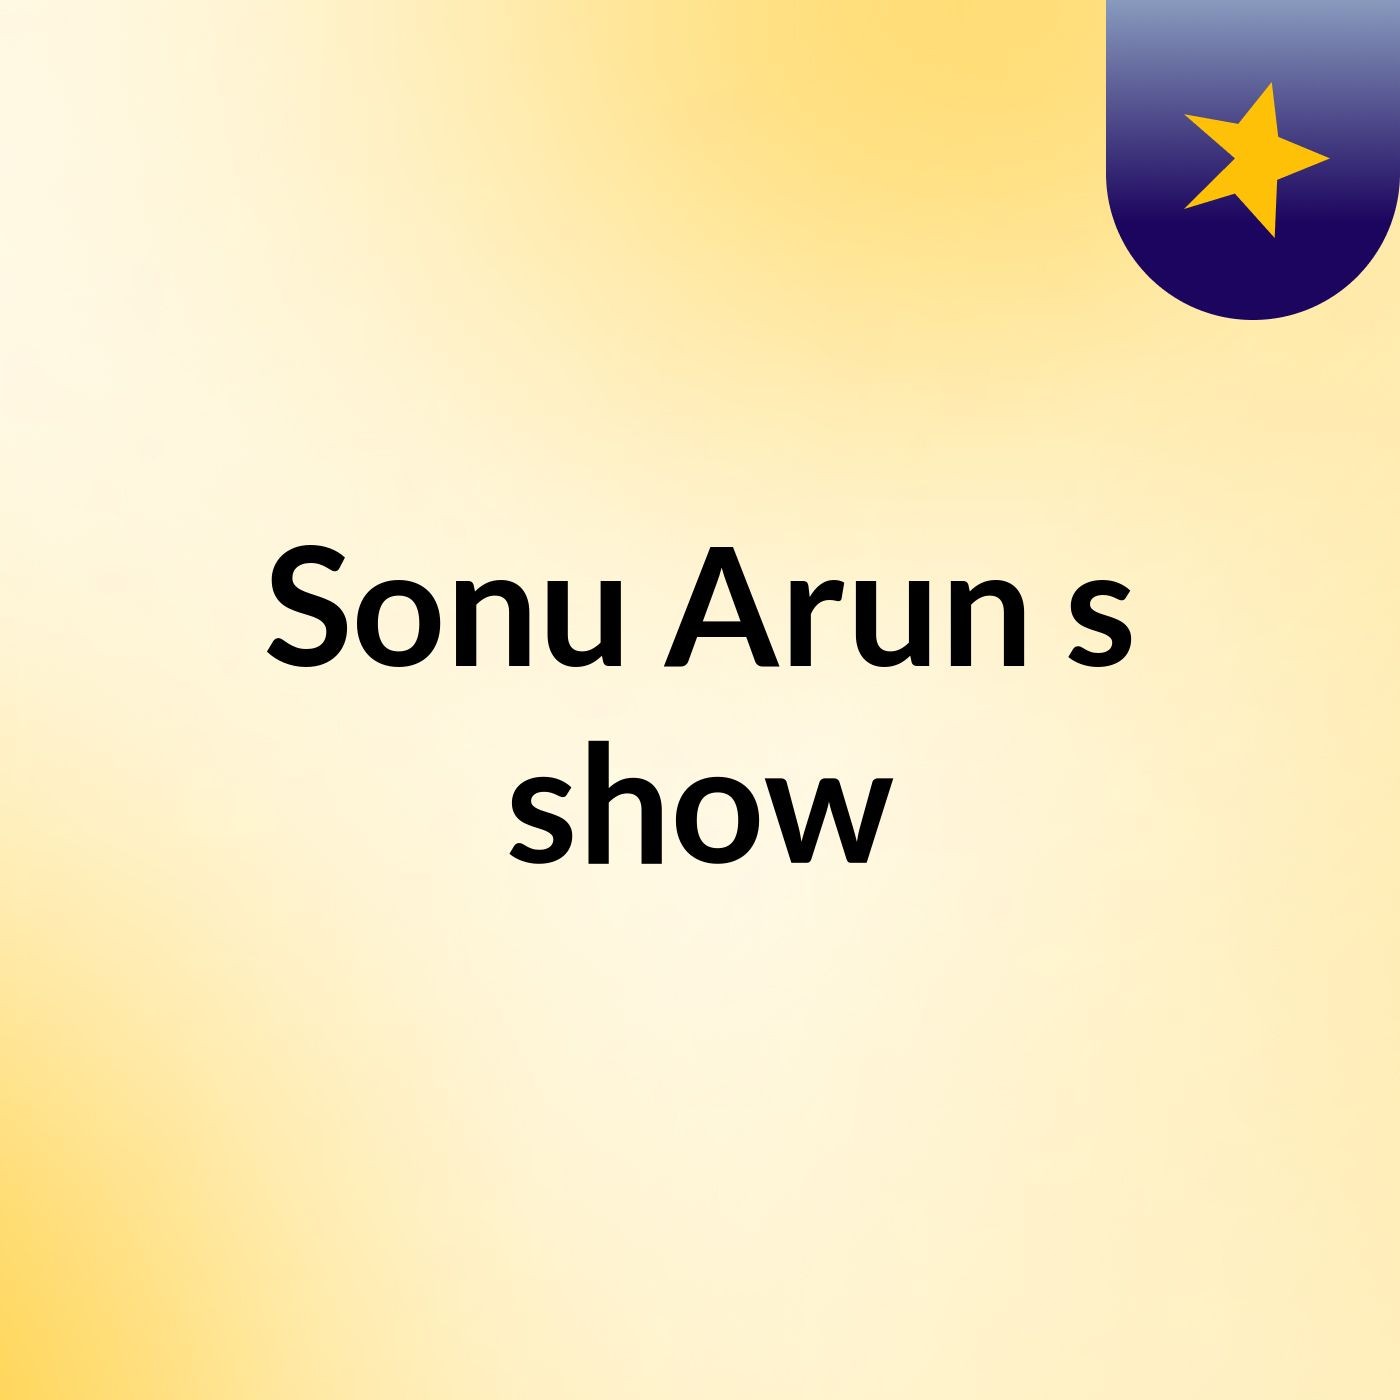 Sonu Arun's show